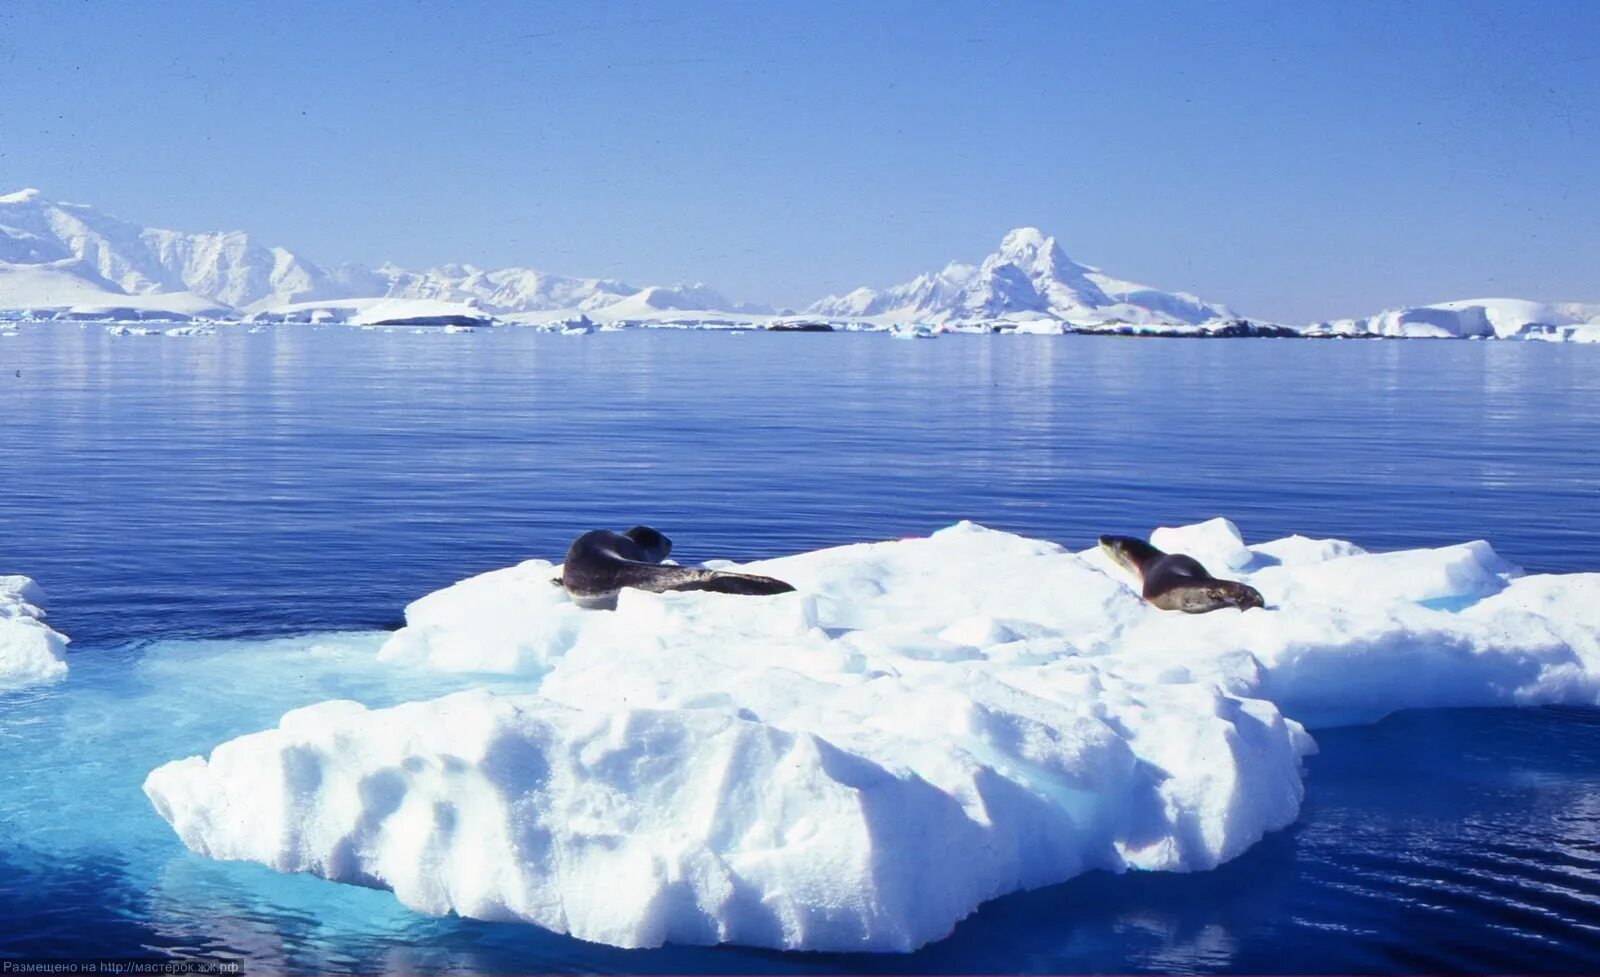 Море росса какой океан. Море Уэдделла в Антарктиде. Море Уэдделла моря Южного океана. Море Уэдделла ледник. Море Уэдделла фото.